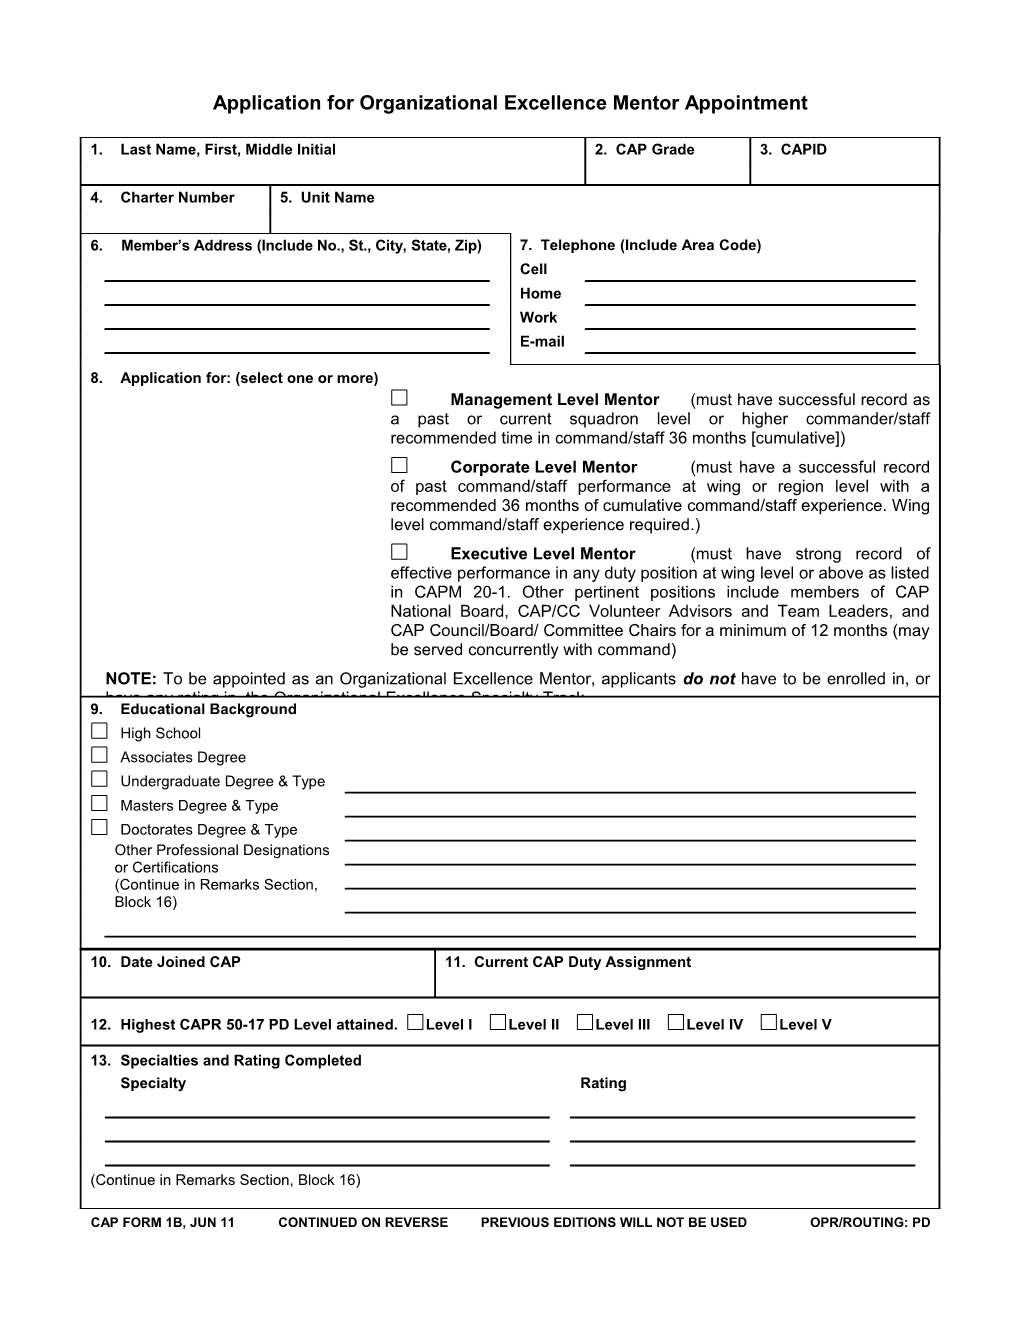 Application for Senior Member Activities